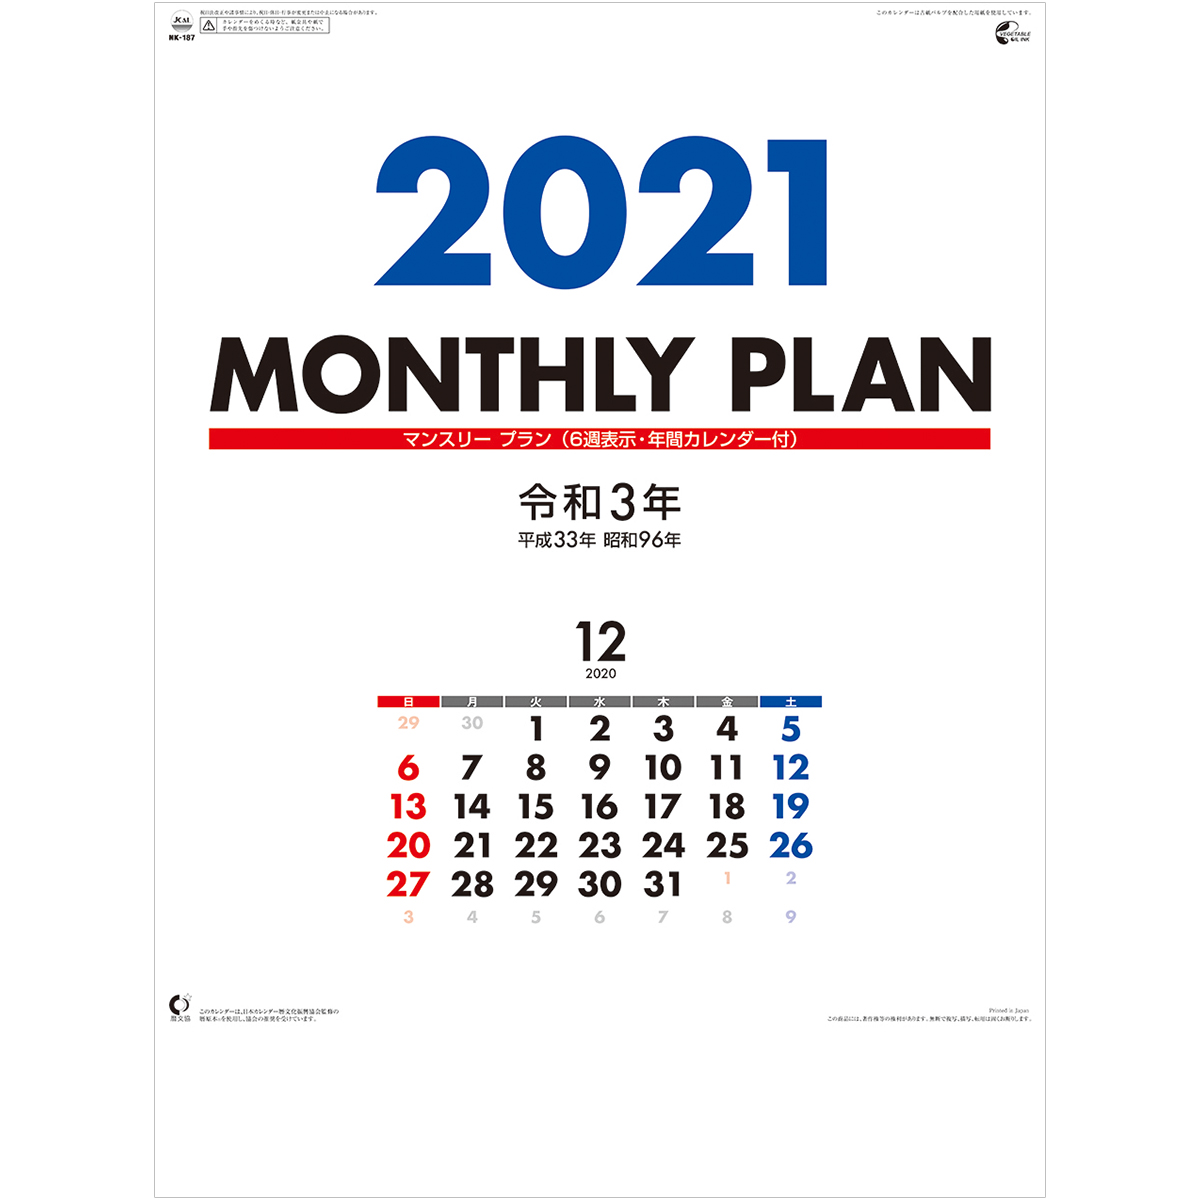 Nk187 マンスリー プラン 6週表示 年間カレンダー付 21年カレンダー 名入れカレンダー製作所 累計35 000社突破